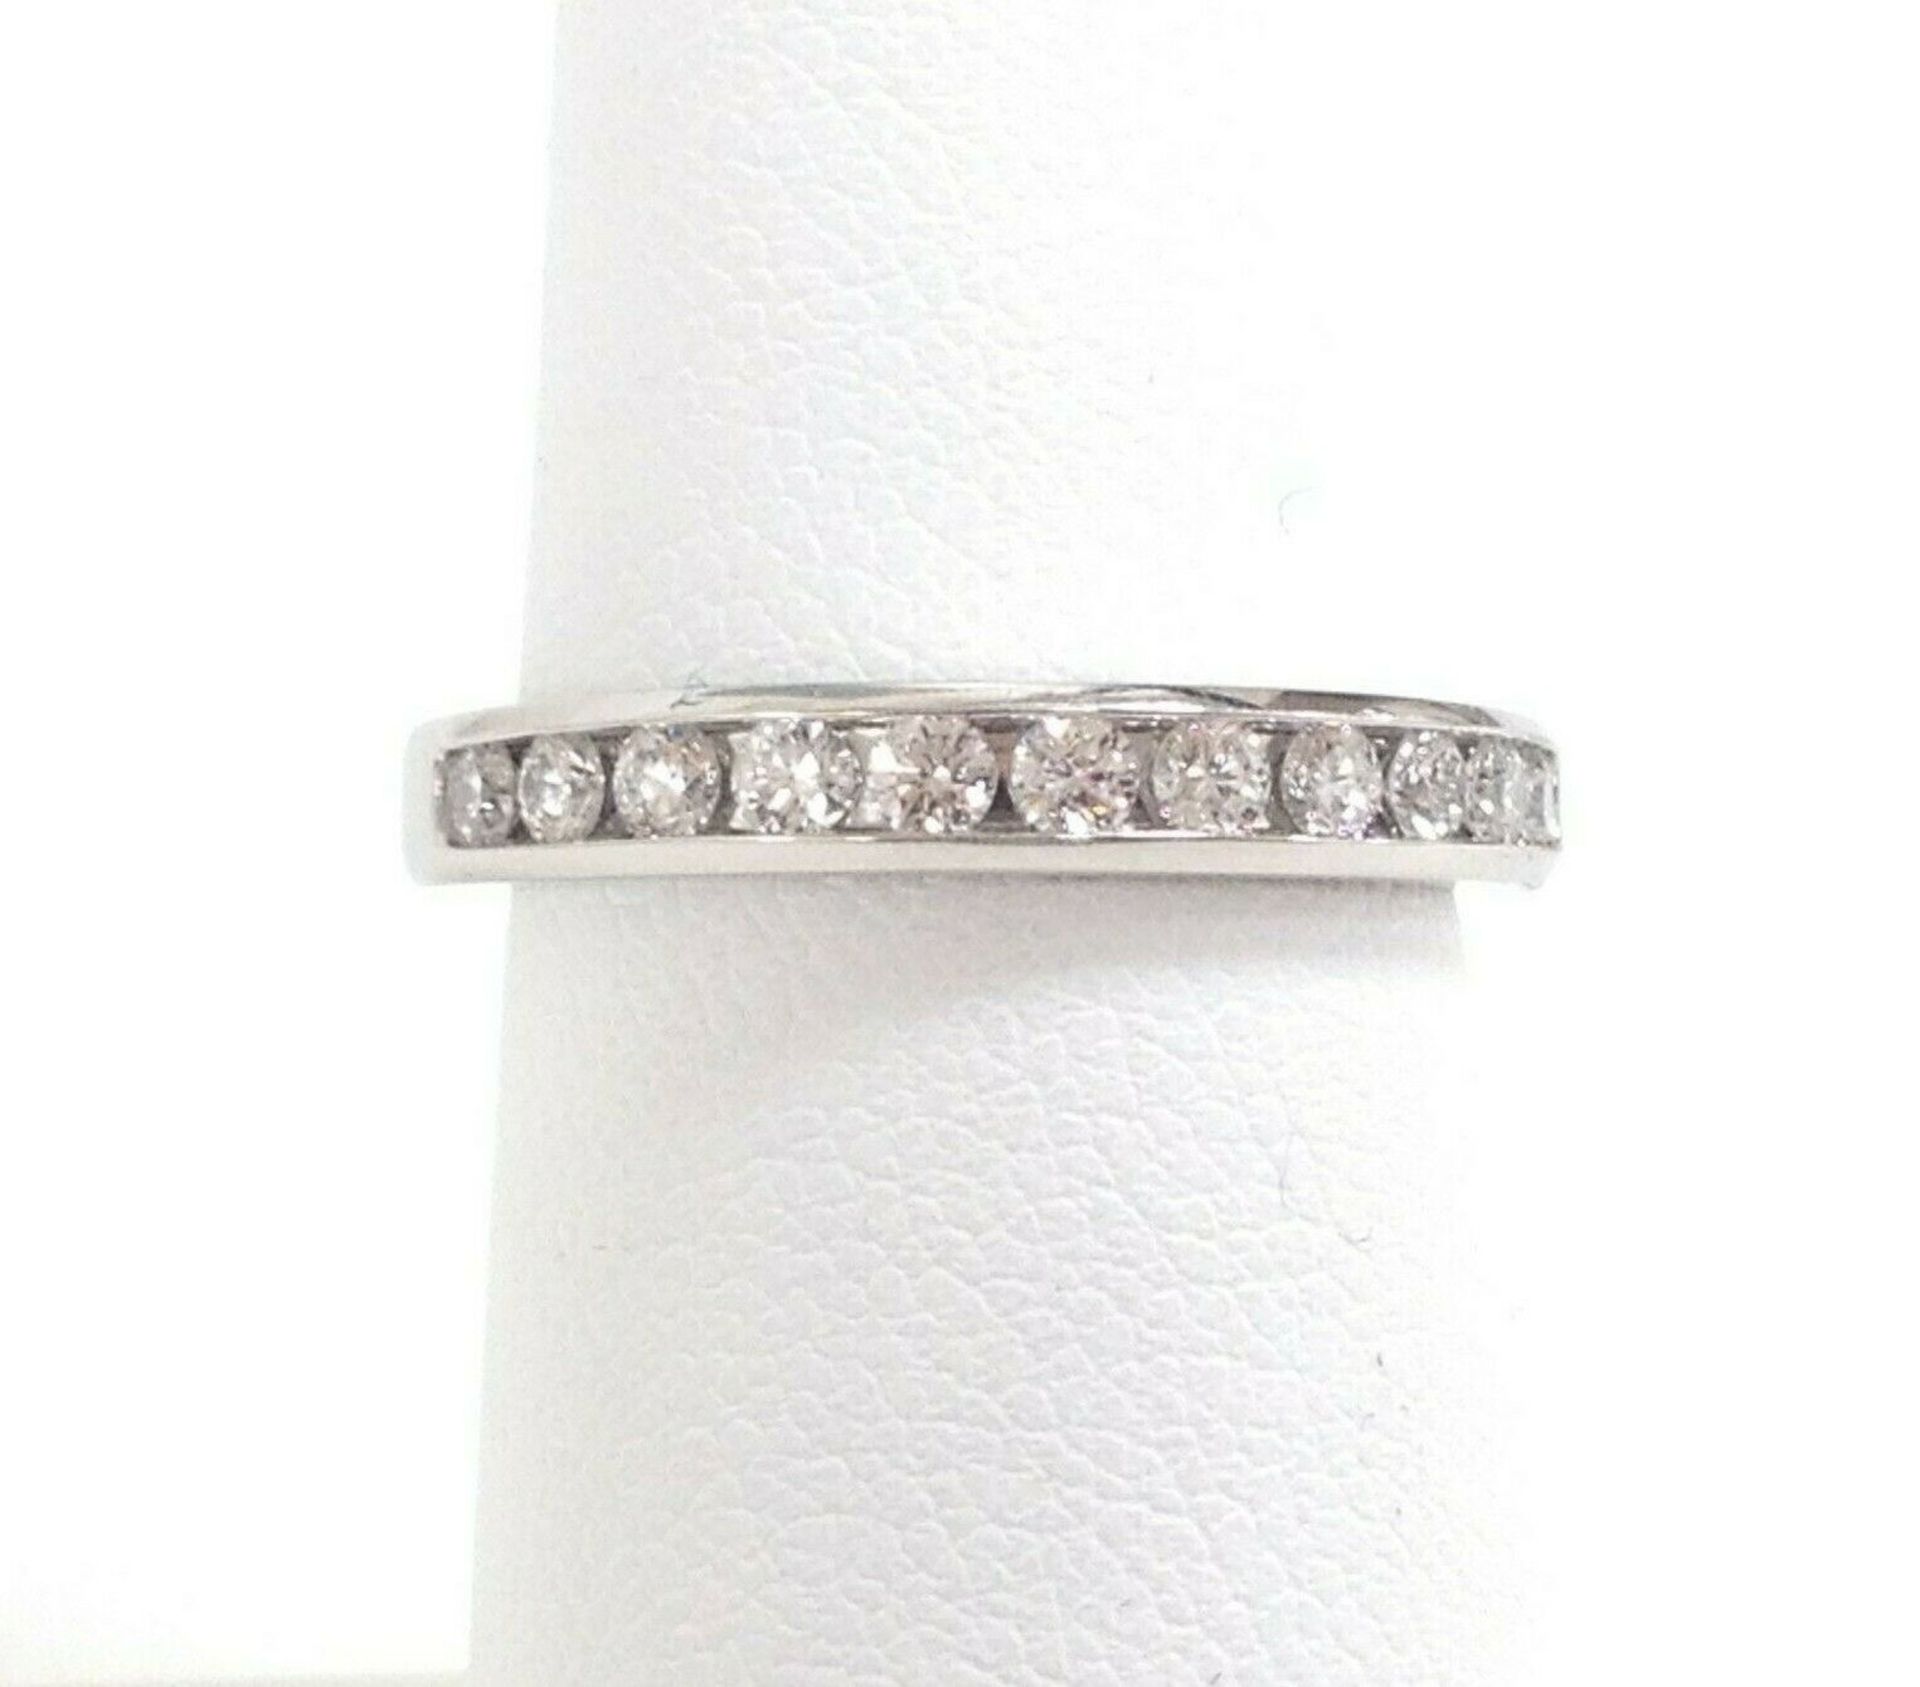 Tiffany & Co 950 Platinum Half Eternity 0.33 ctw Diamond Wedding Ring Band Size 5.75 - Image 3 of 6